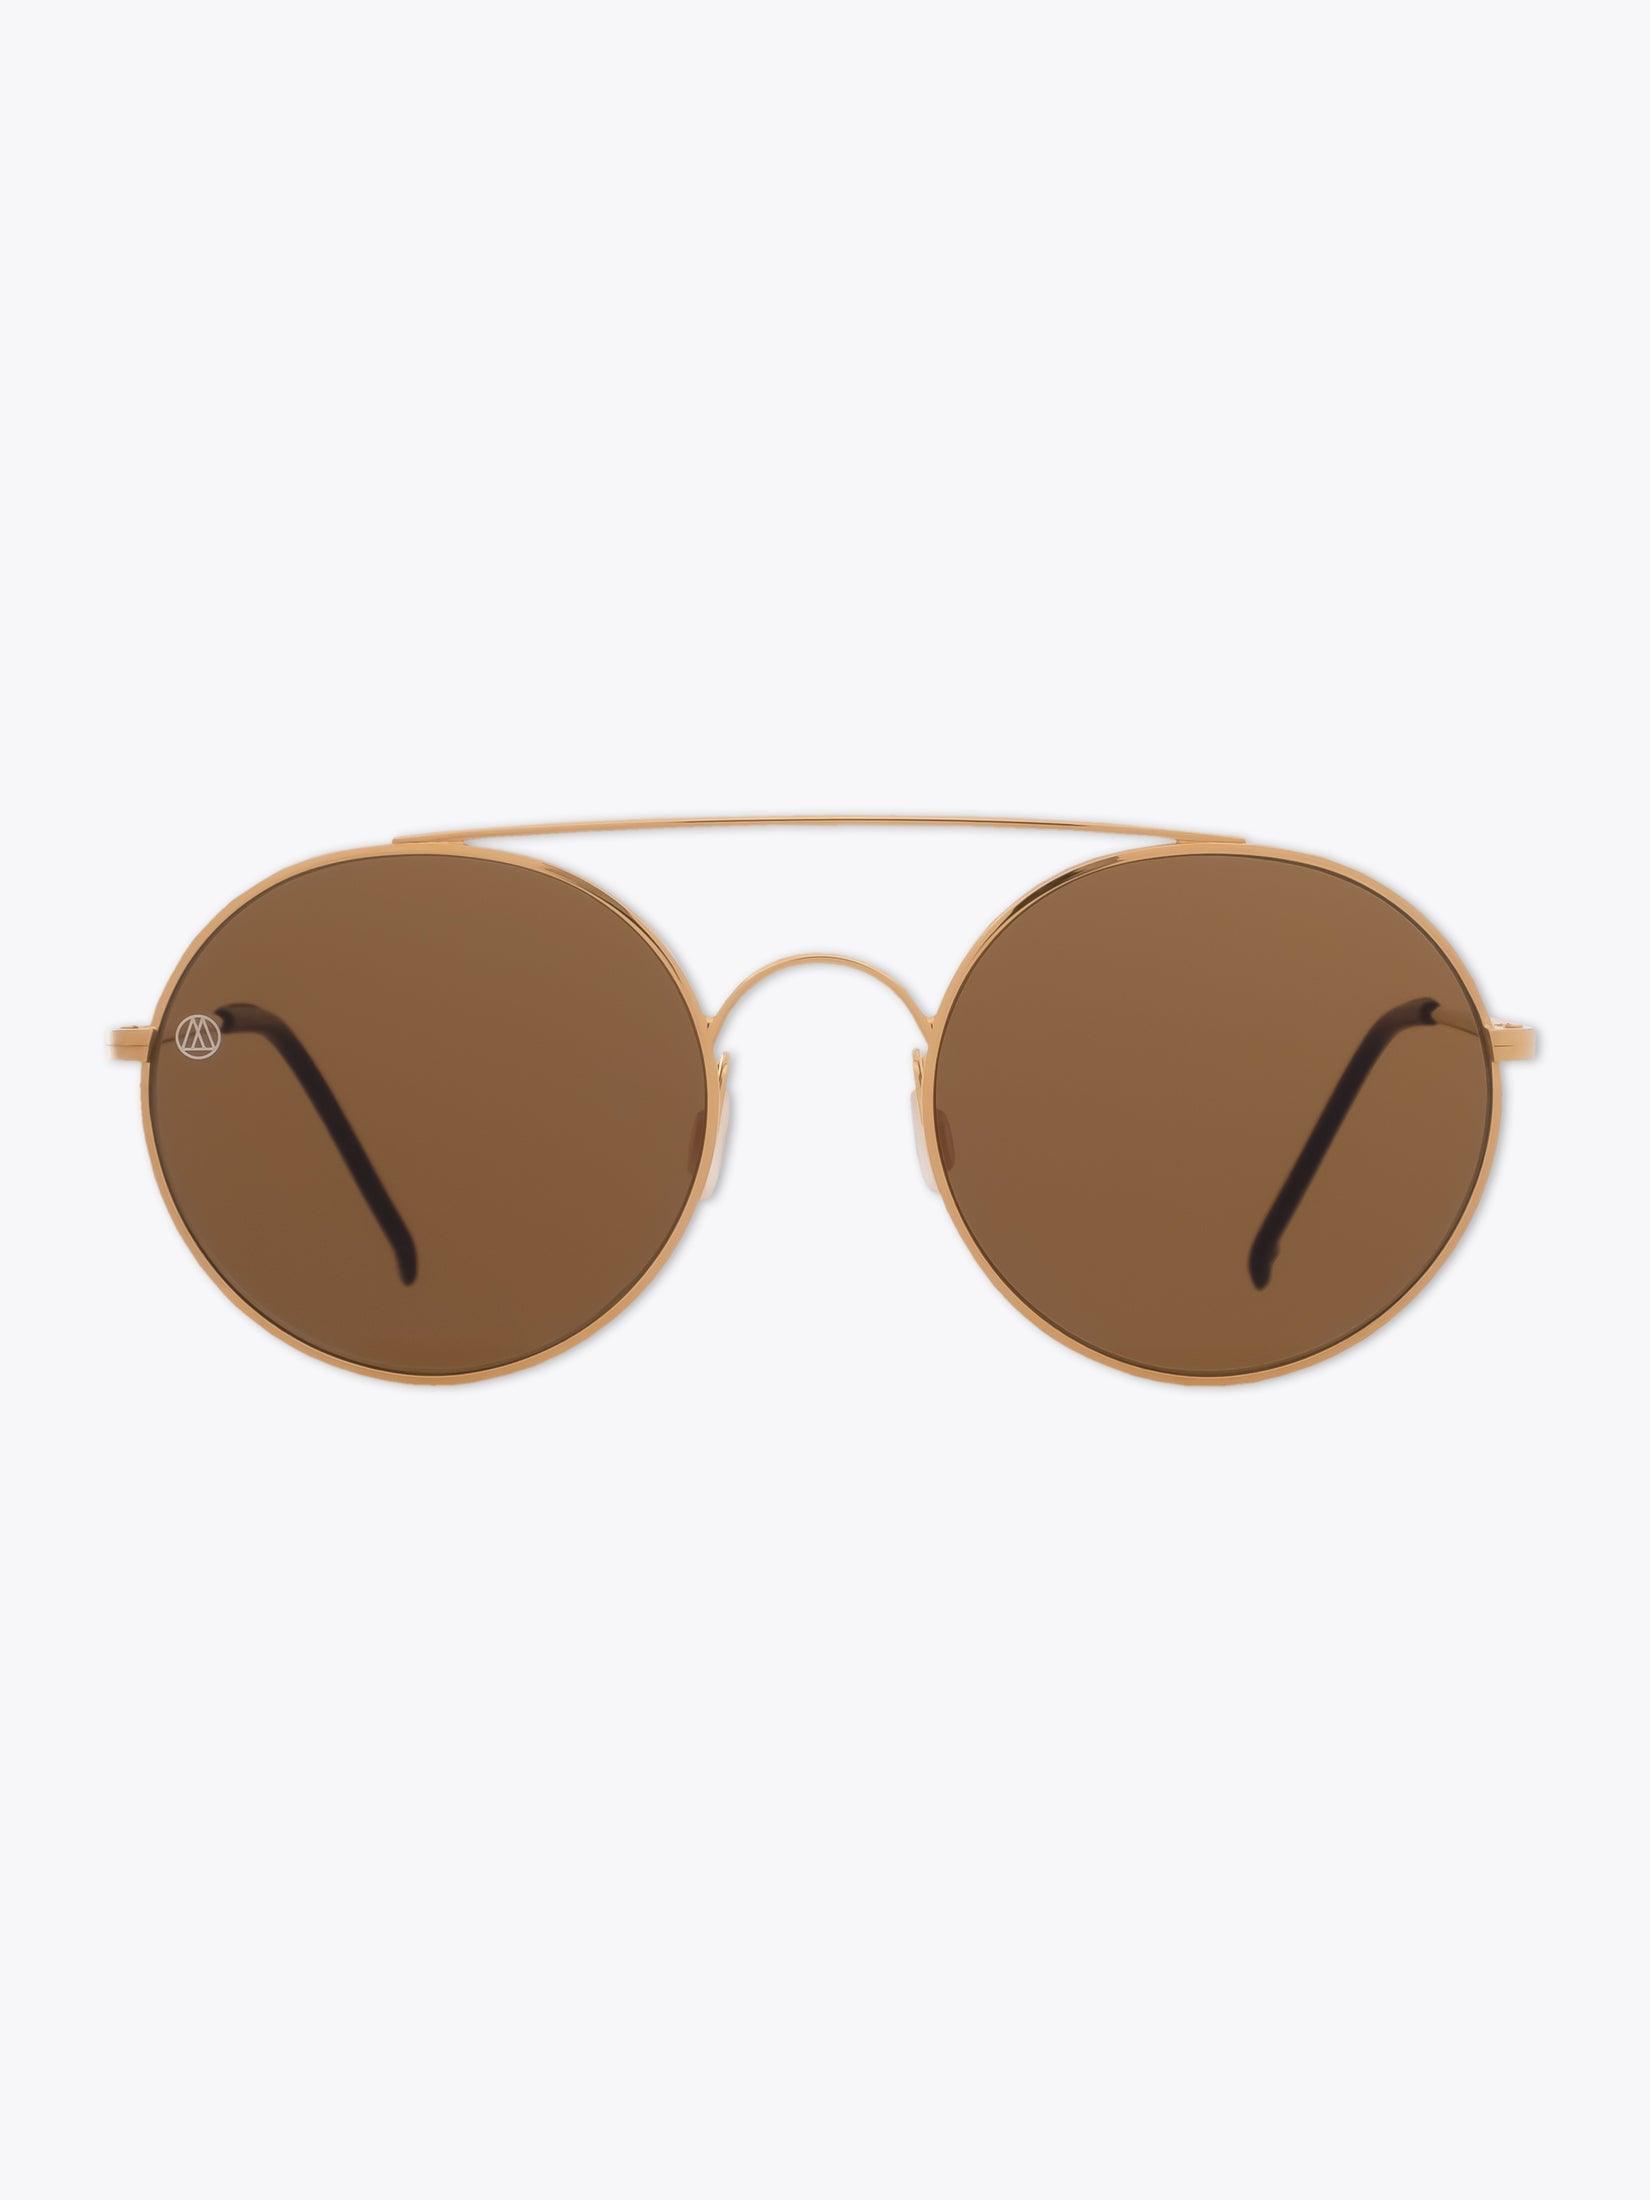 8000 Eyewear 8M6 Gold-Tone Round Sunglasses